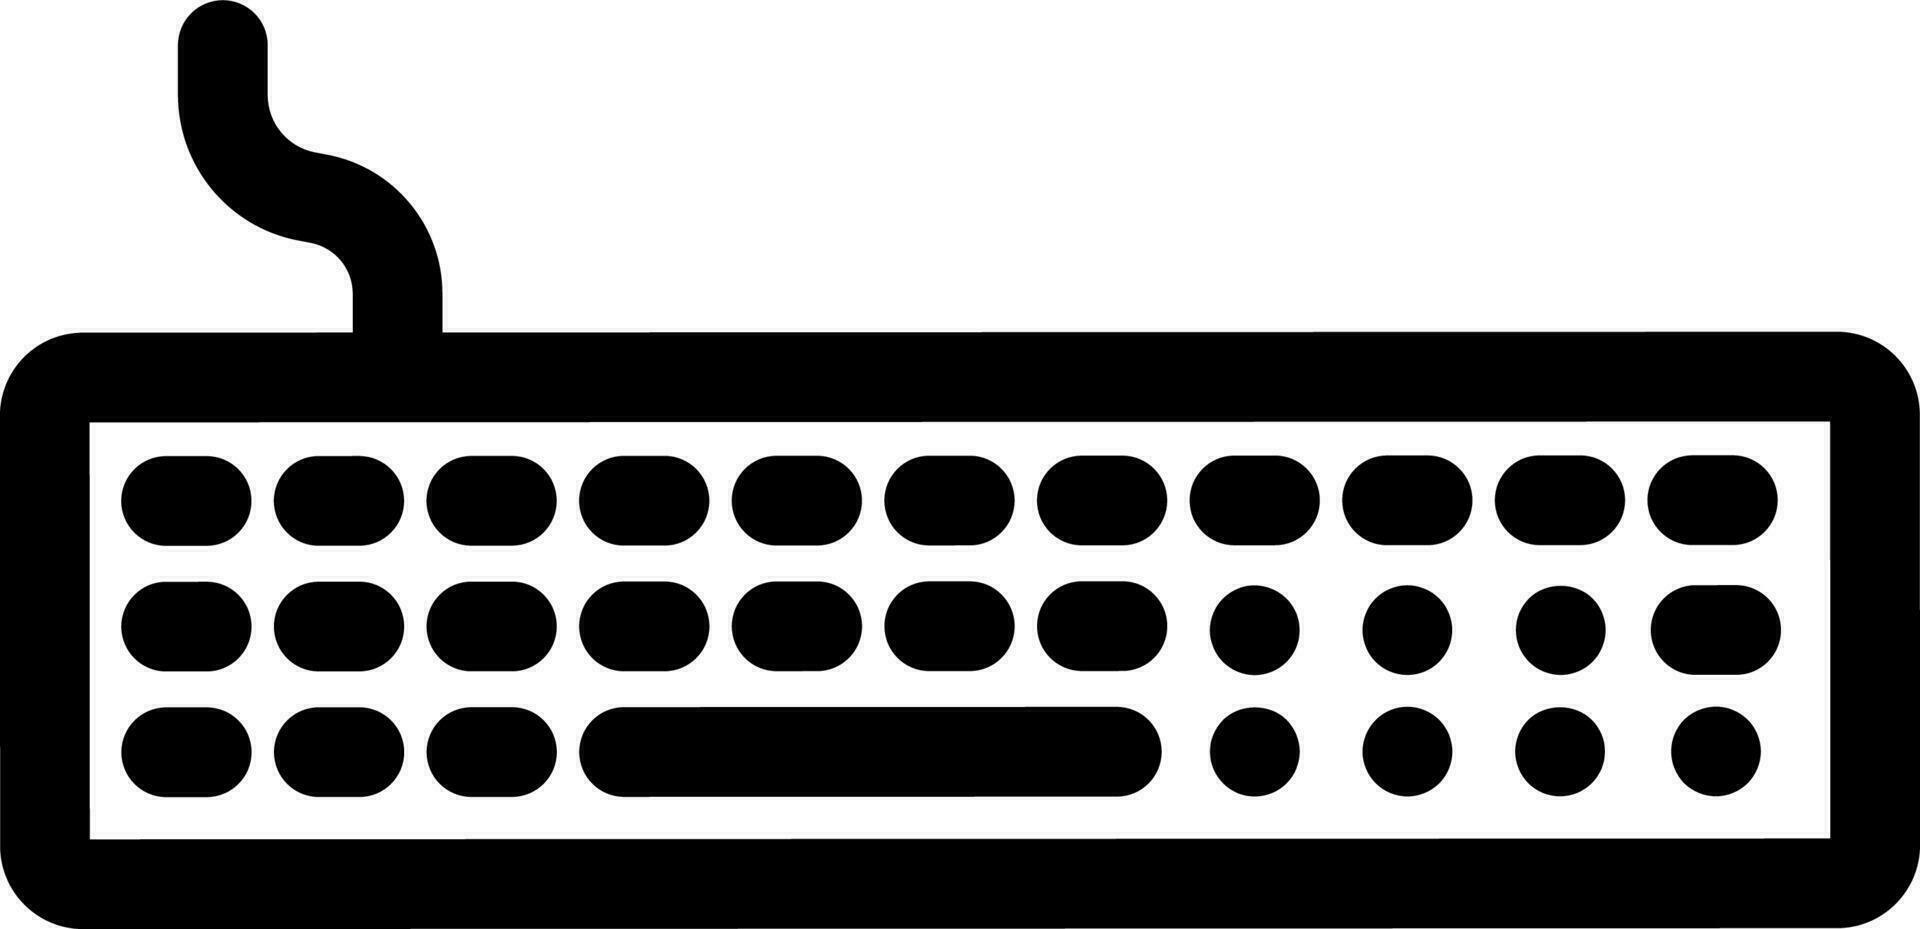 Black line art illustration of Keyboard icon. vector